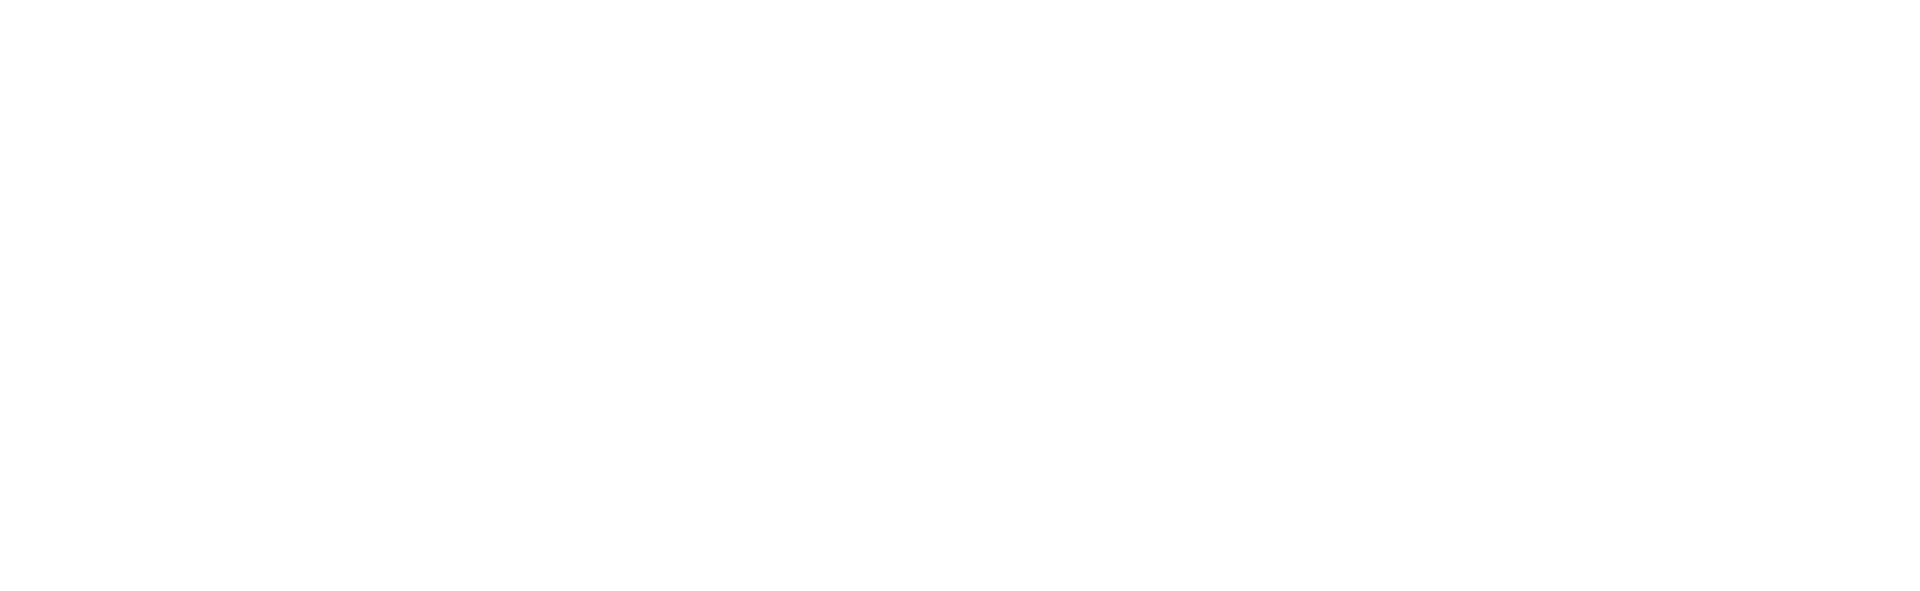 Aztec fleet sales logo.